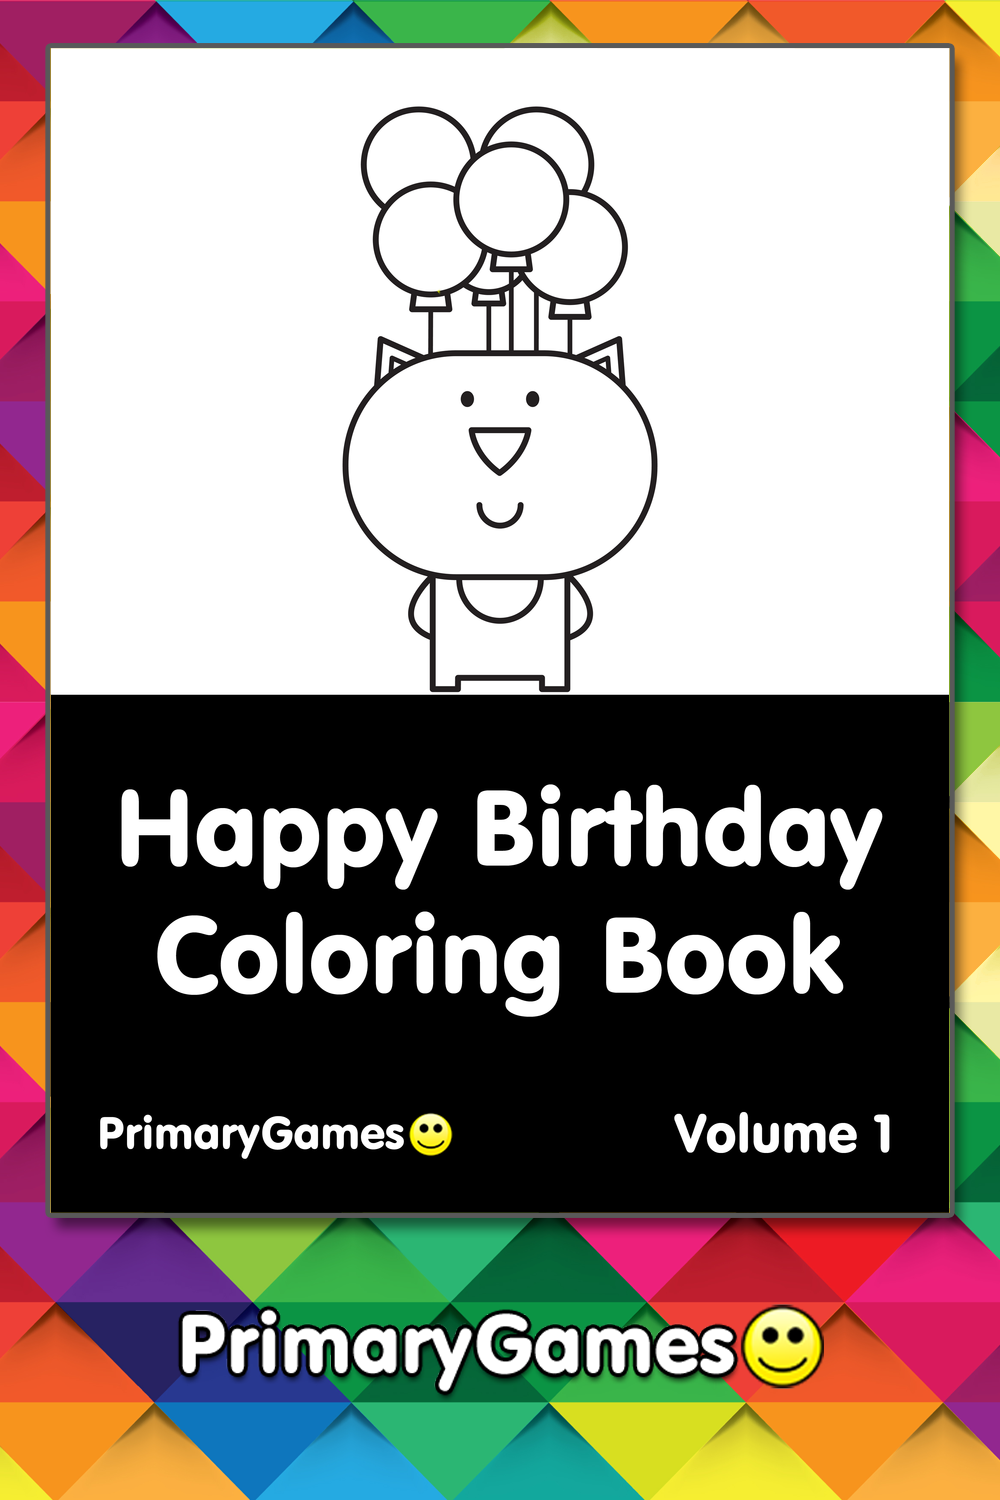 Download Happy Birthday Coloring eBook: Volume 1 • FREE Printable PDF from PrimaryGames